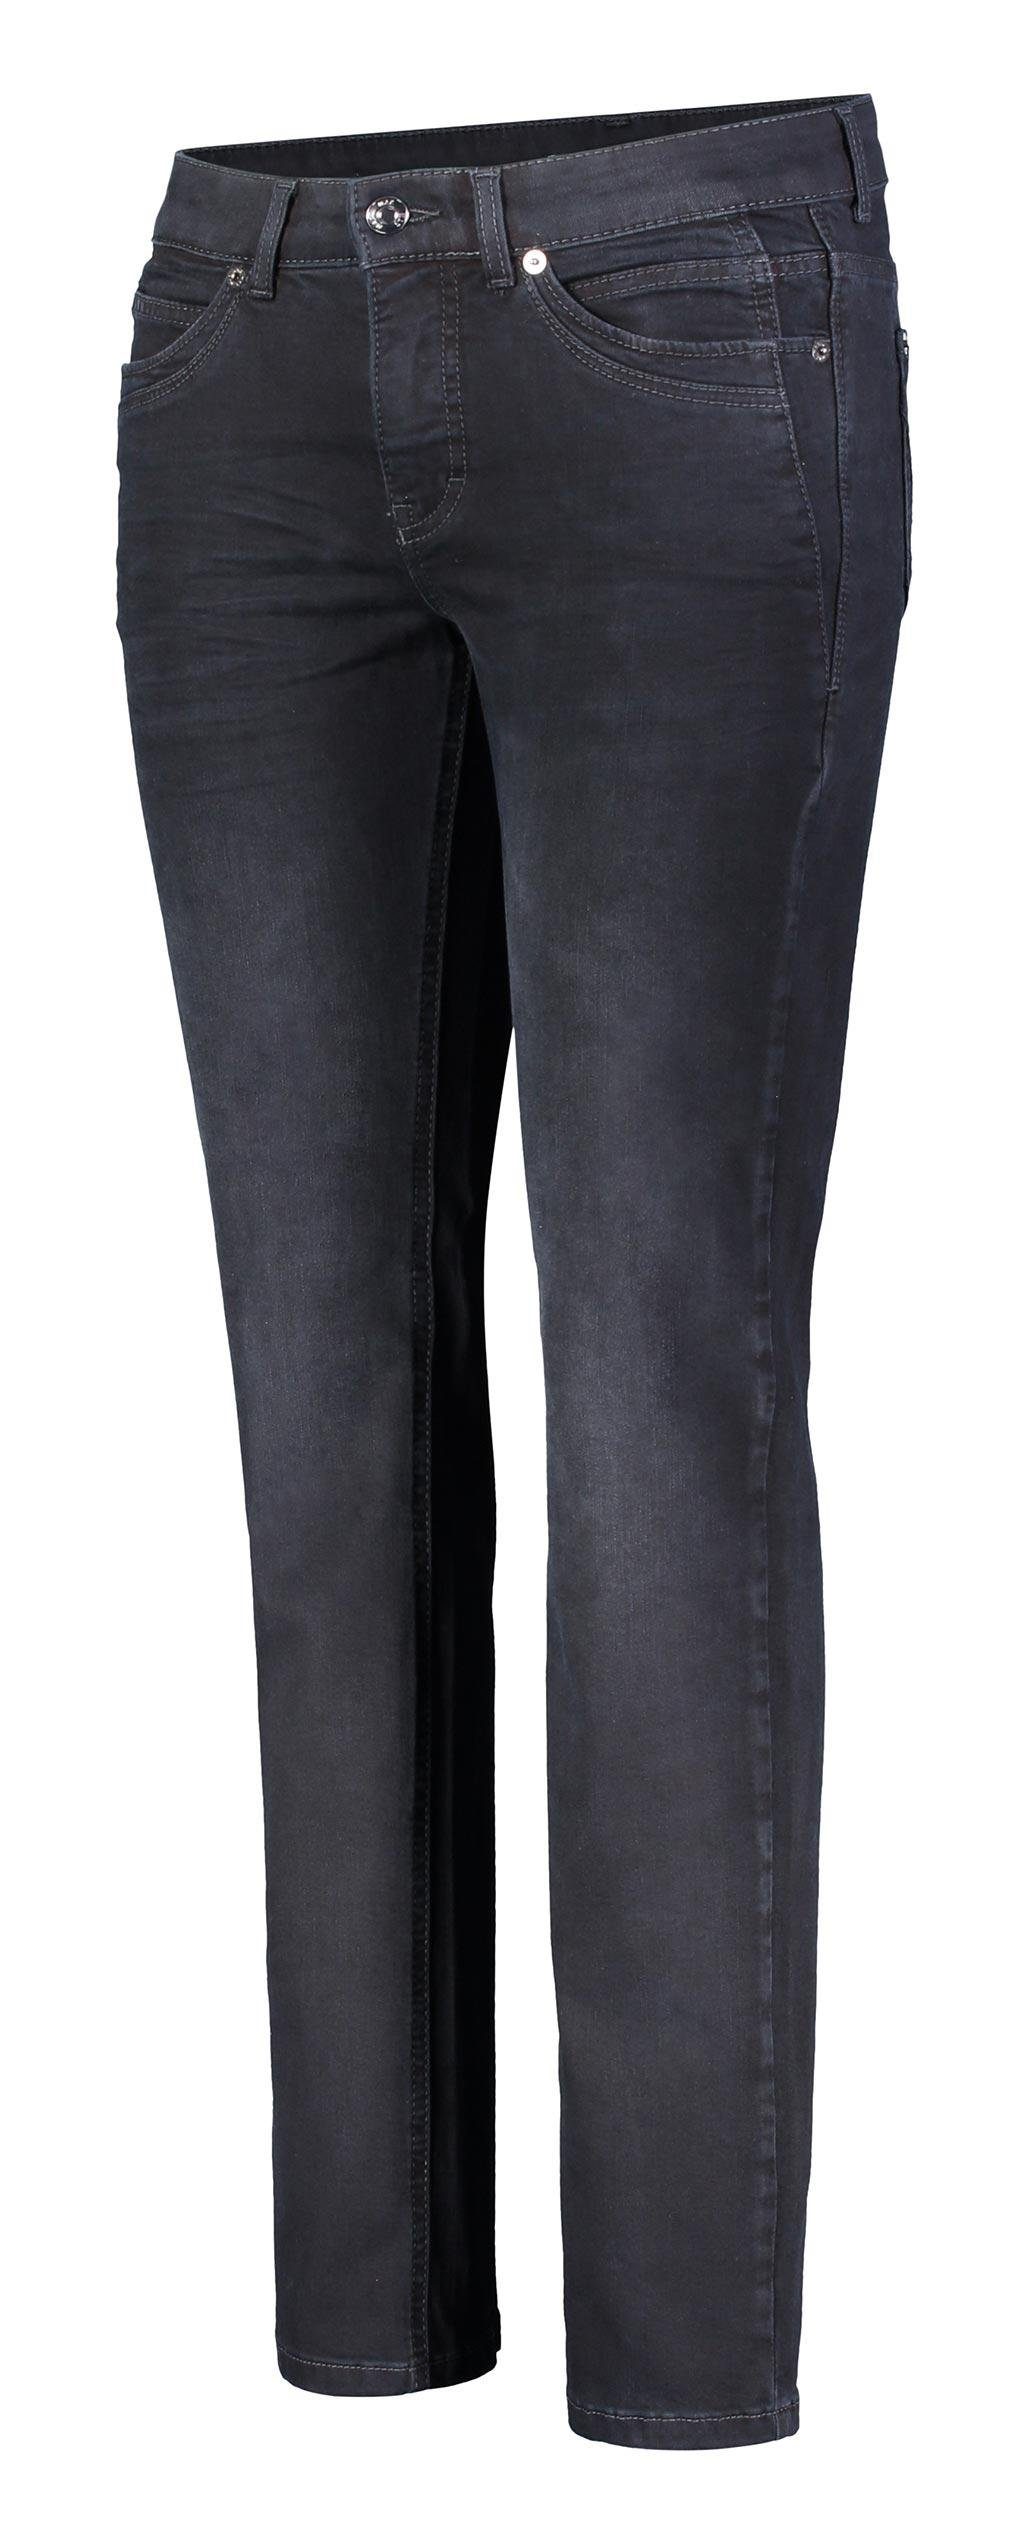 Qualität garantiert! MAC Stretch-Jeans MAC ANGELA dark wash 5268-90-0380L D869 black blue